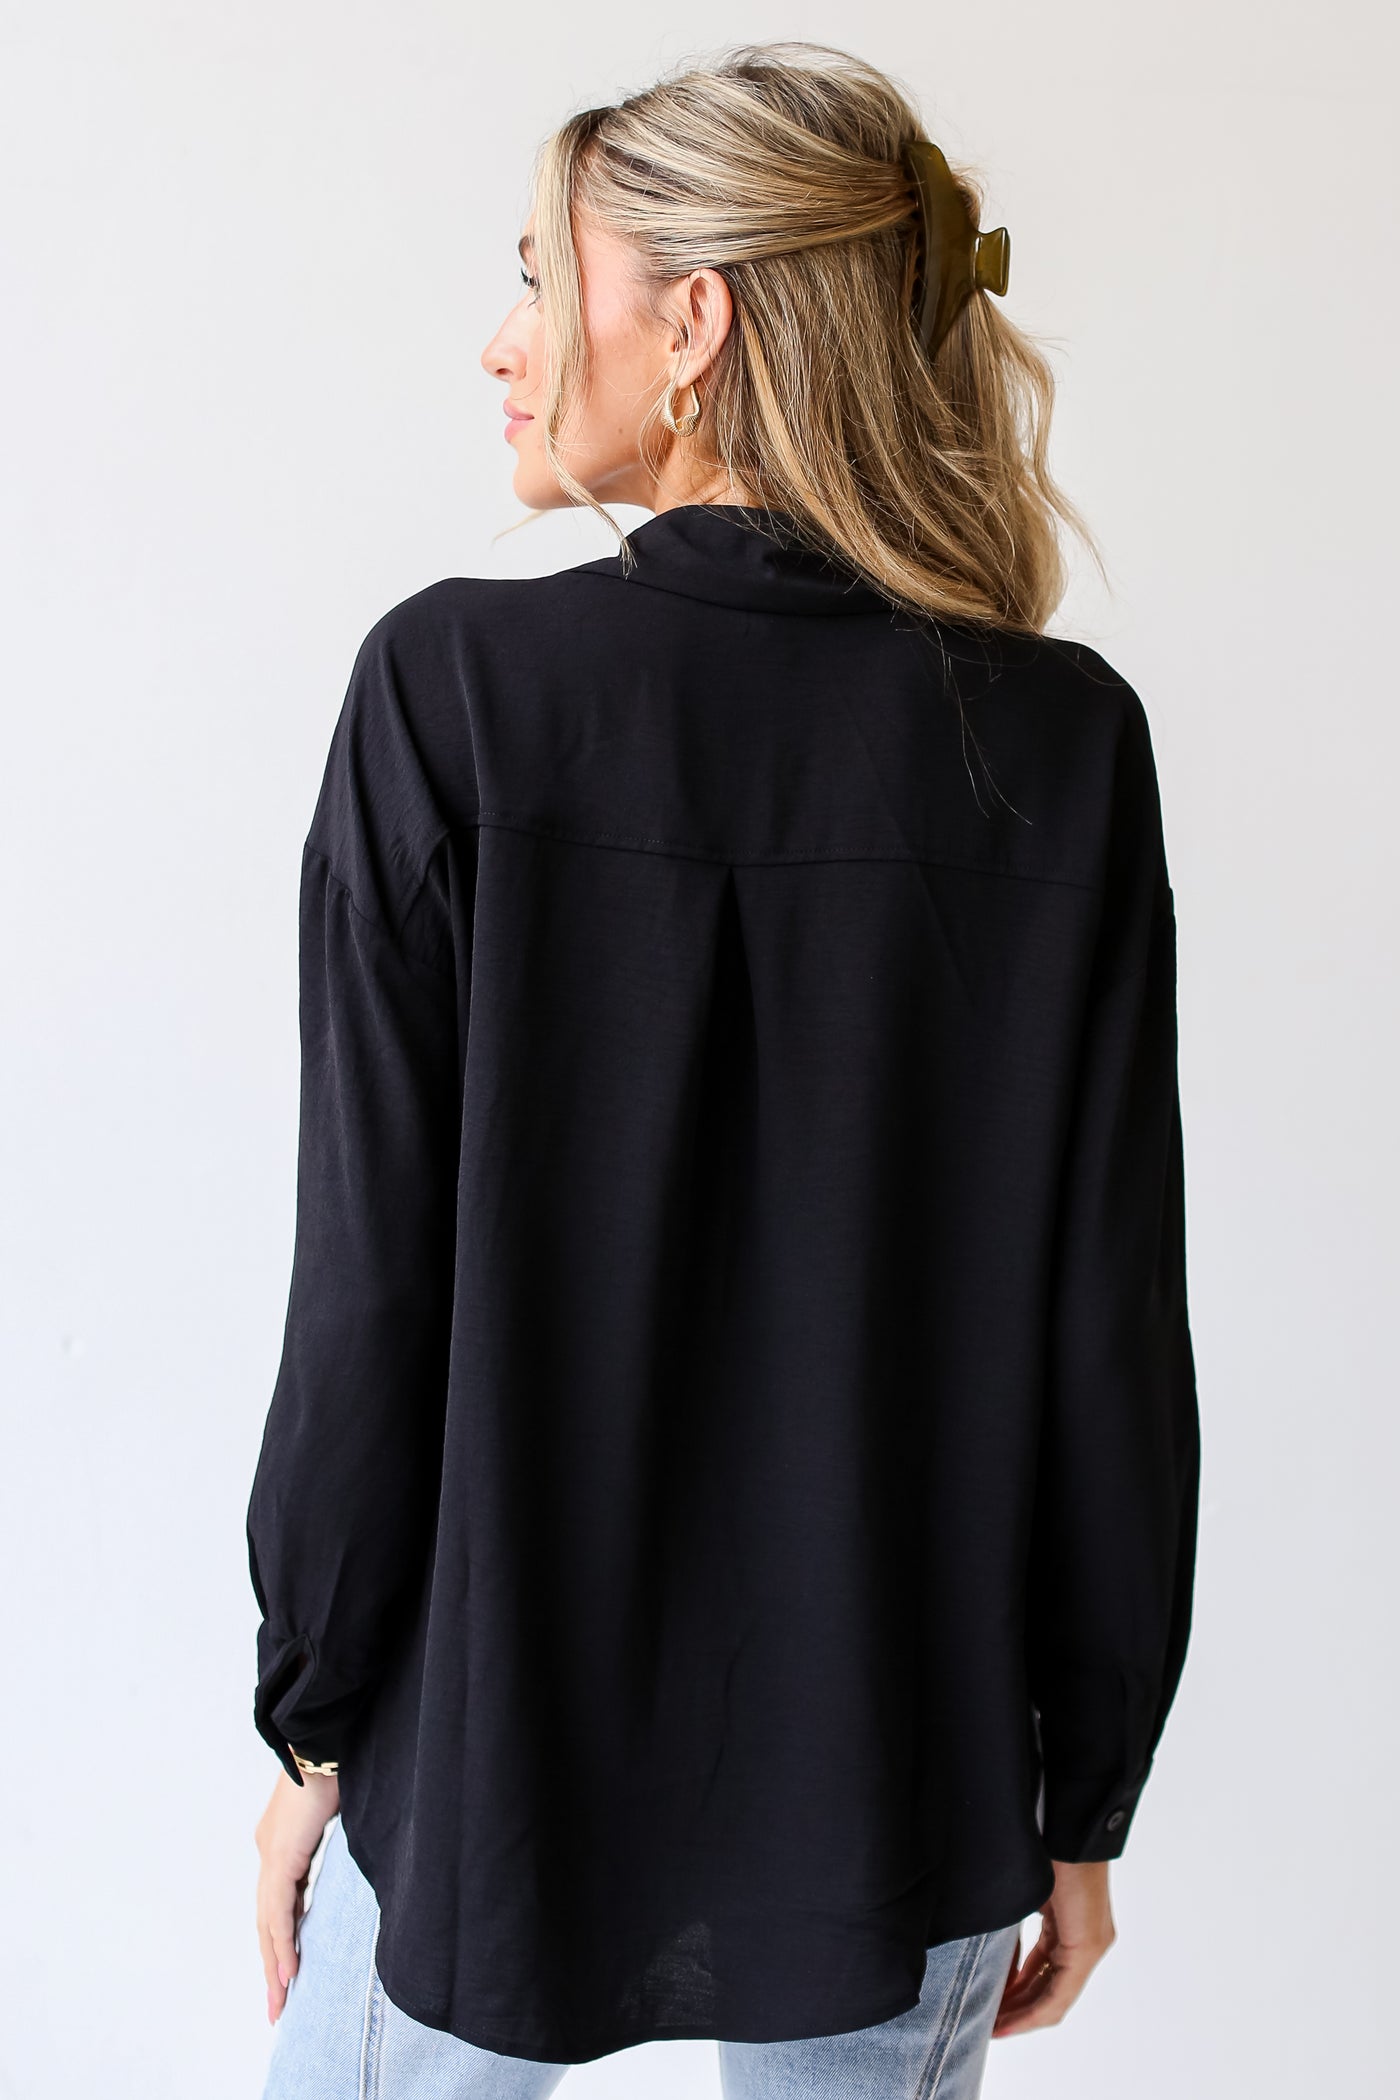 black Button-Up Blouse back view